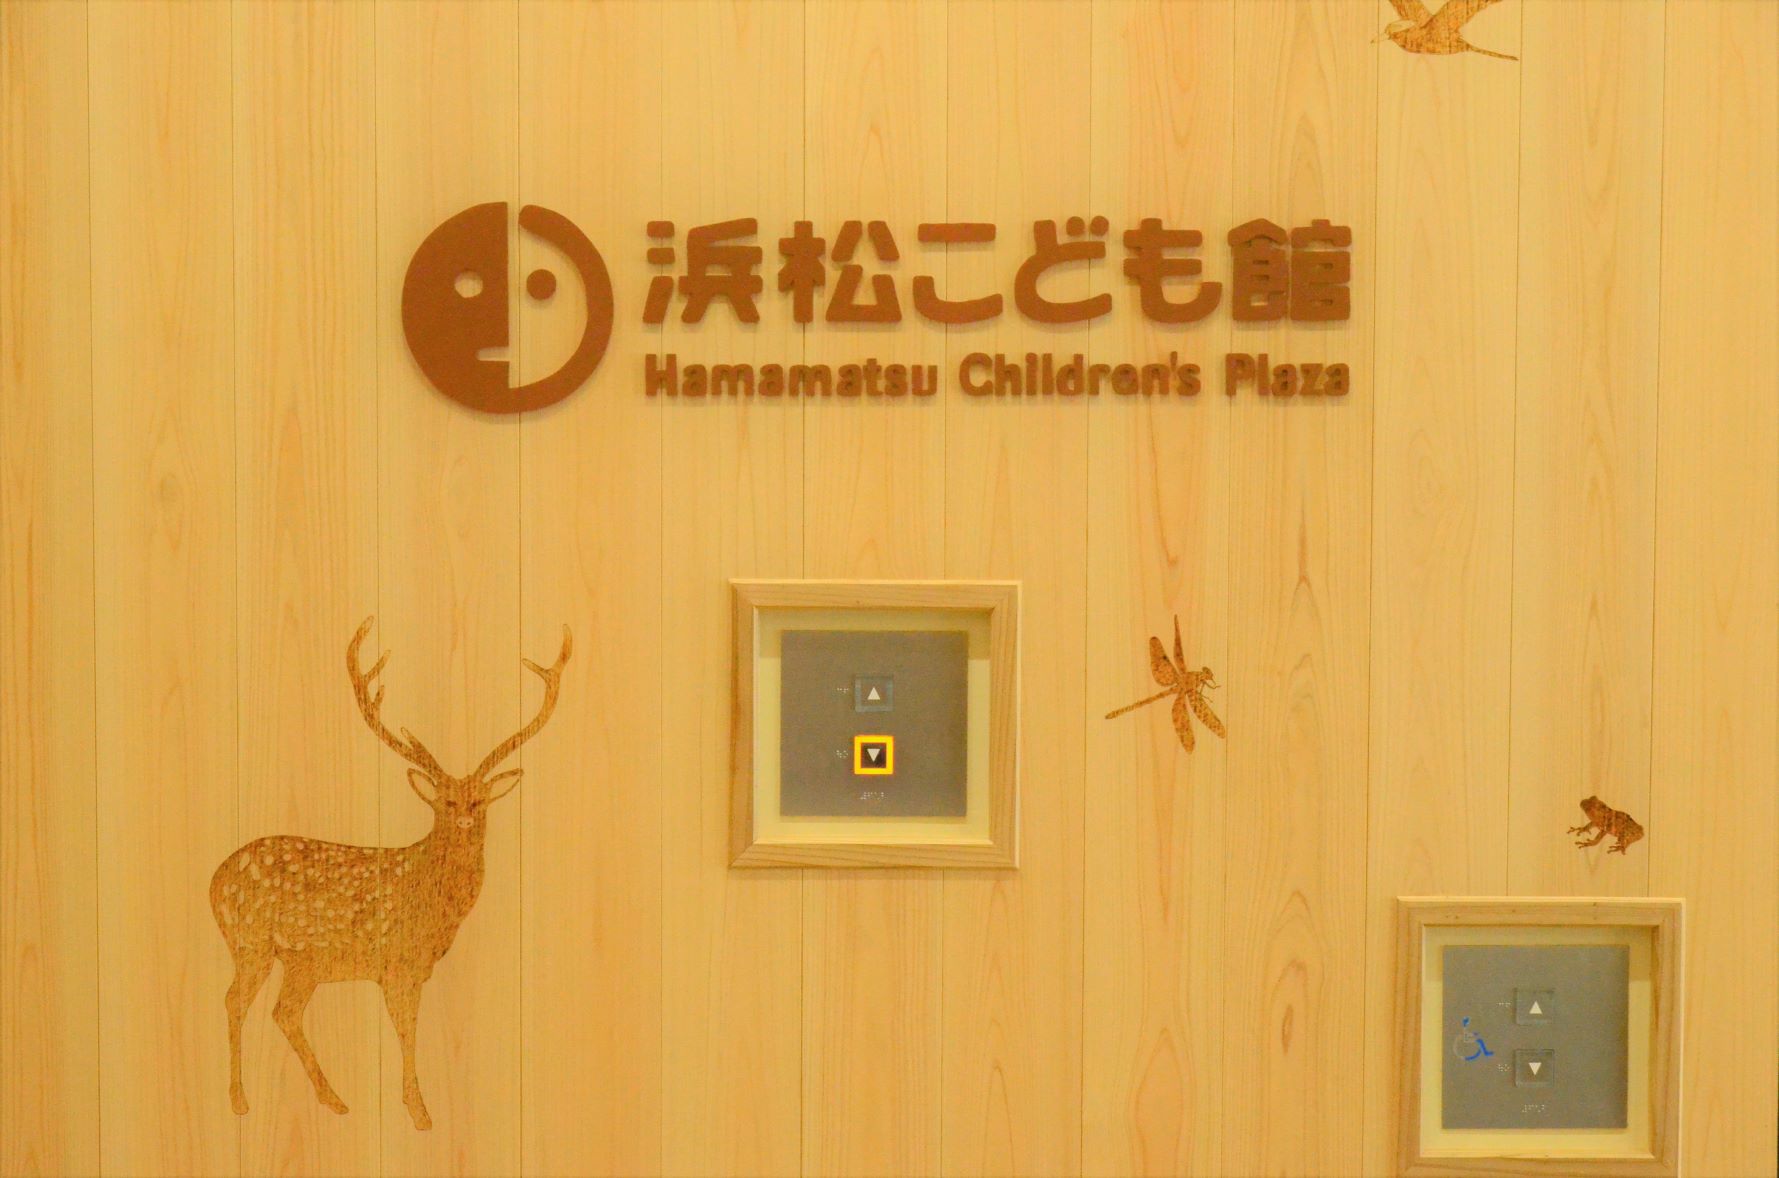 See you. Hamamatsu Children's Hall.